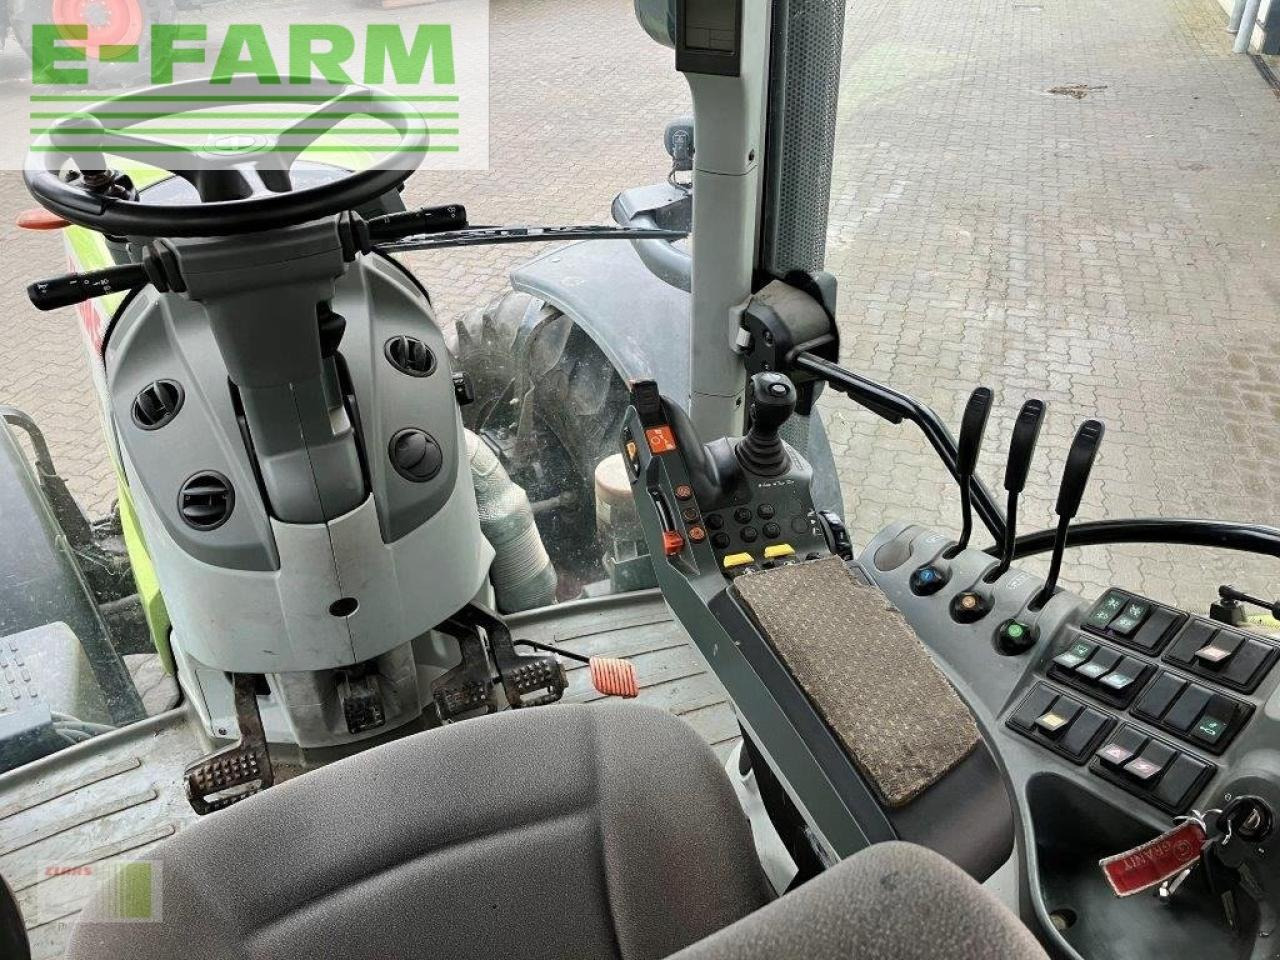 Farm tractor CLAAS arion 640 hexashift